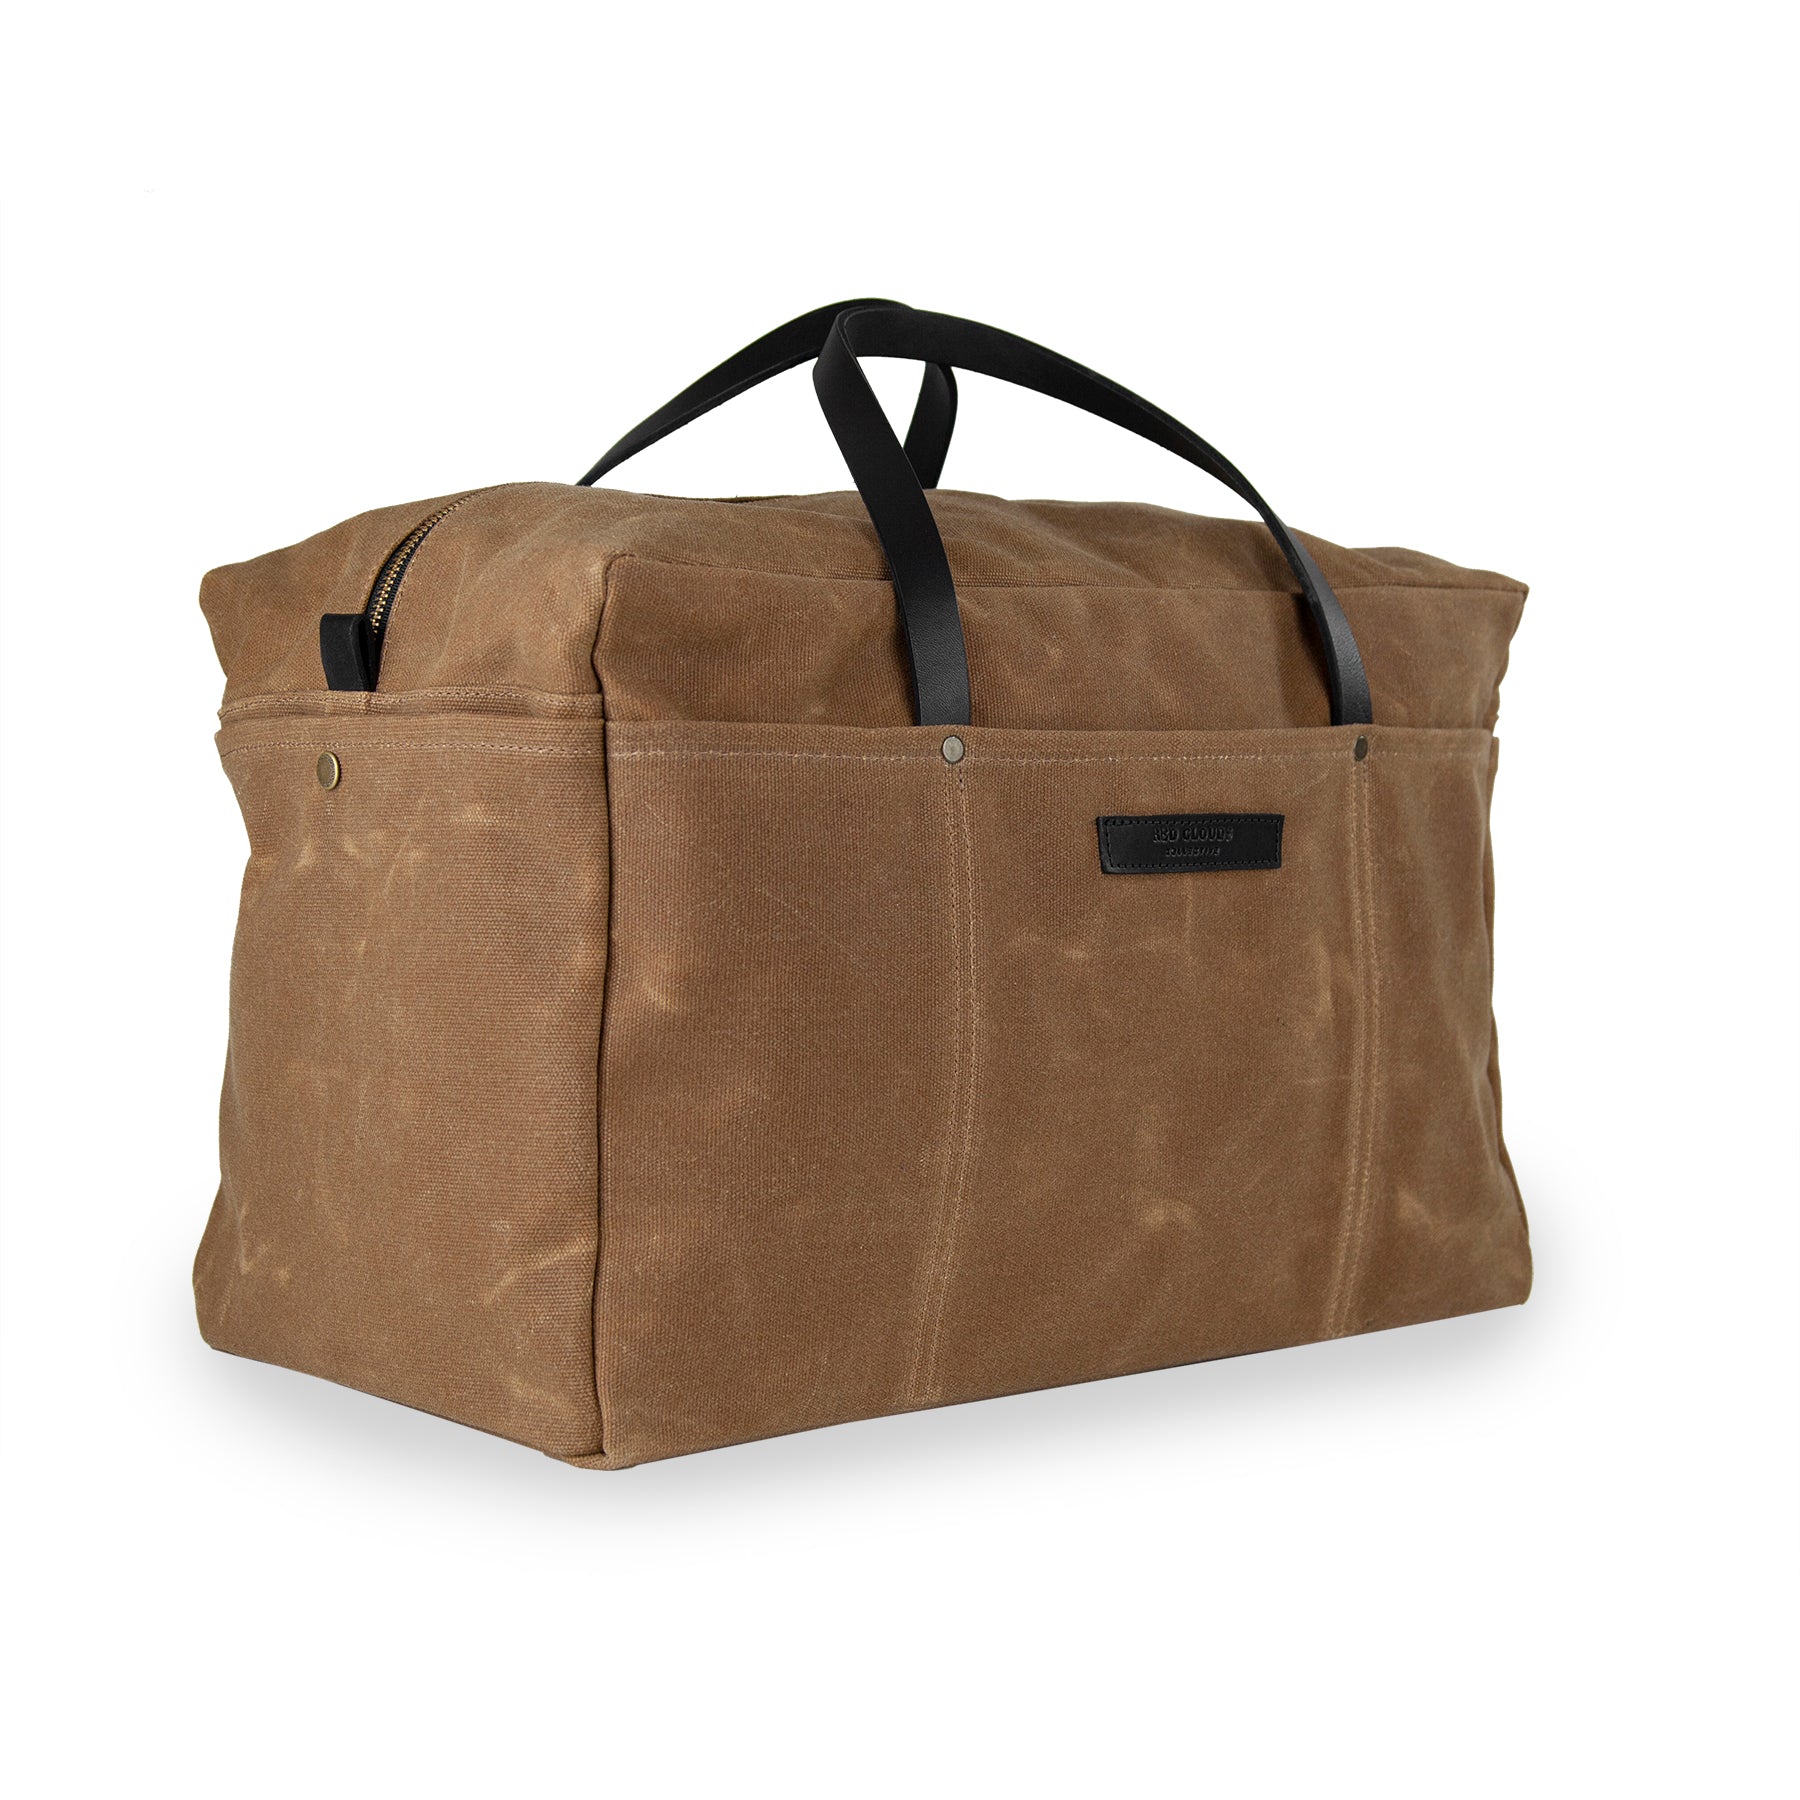 duffle bag, waxed canvas bag, travel bag, made in usa bag, red clouds backpack, bag, duffle, portland